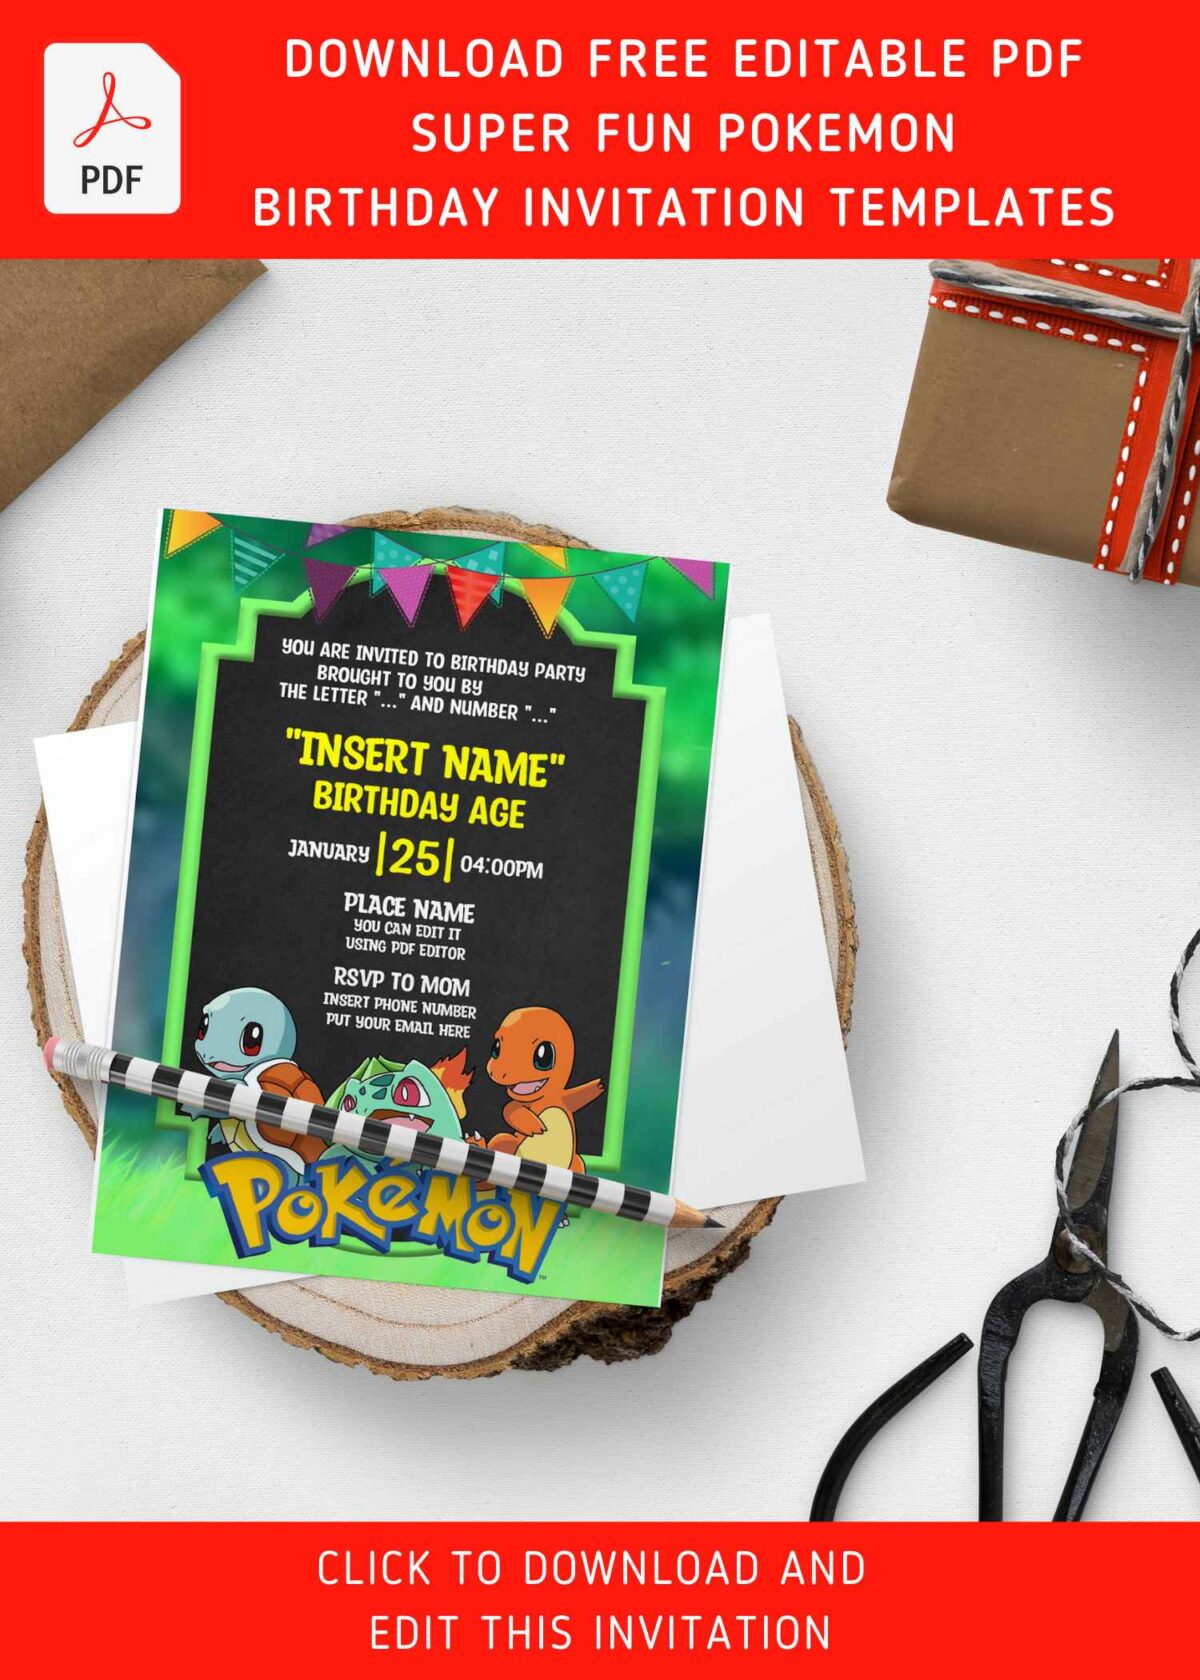 (Free Editable PDF) Hilarious Pikachu And Friends Pokémon Birthday Invitation Templates with editable text